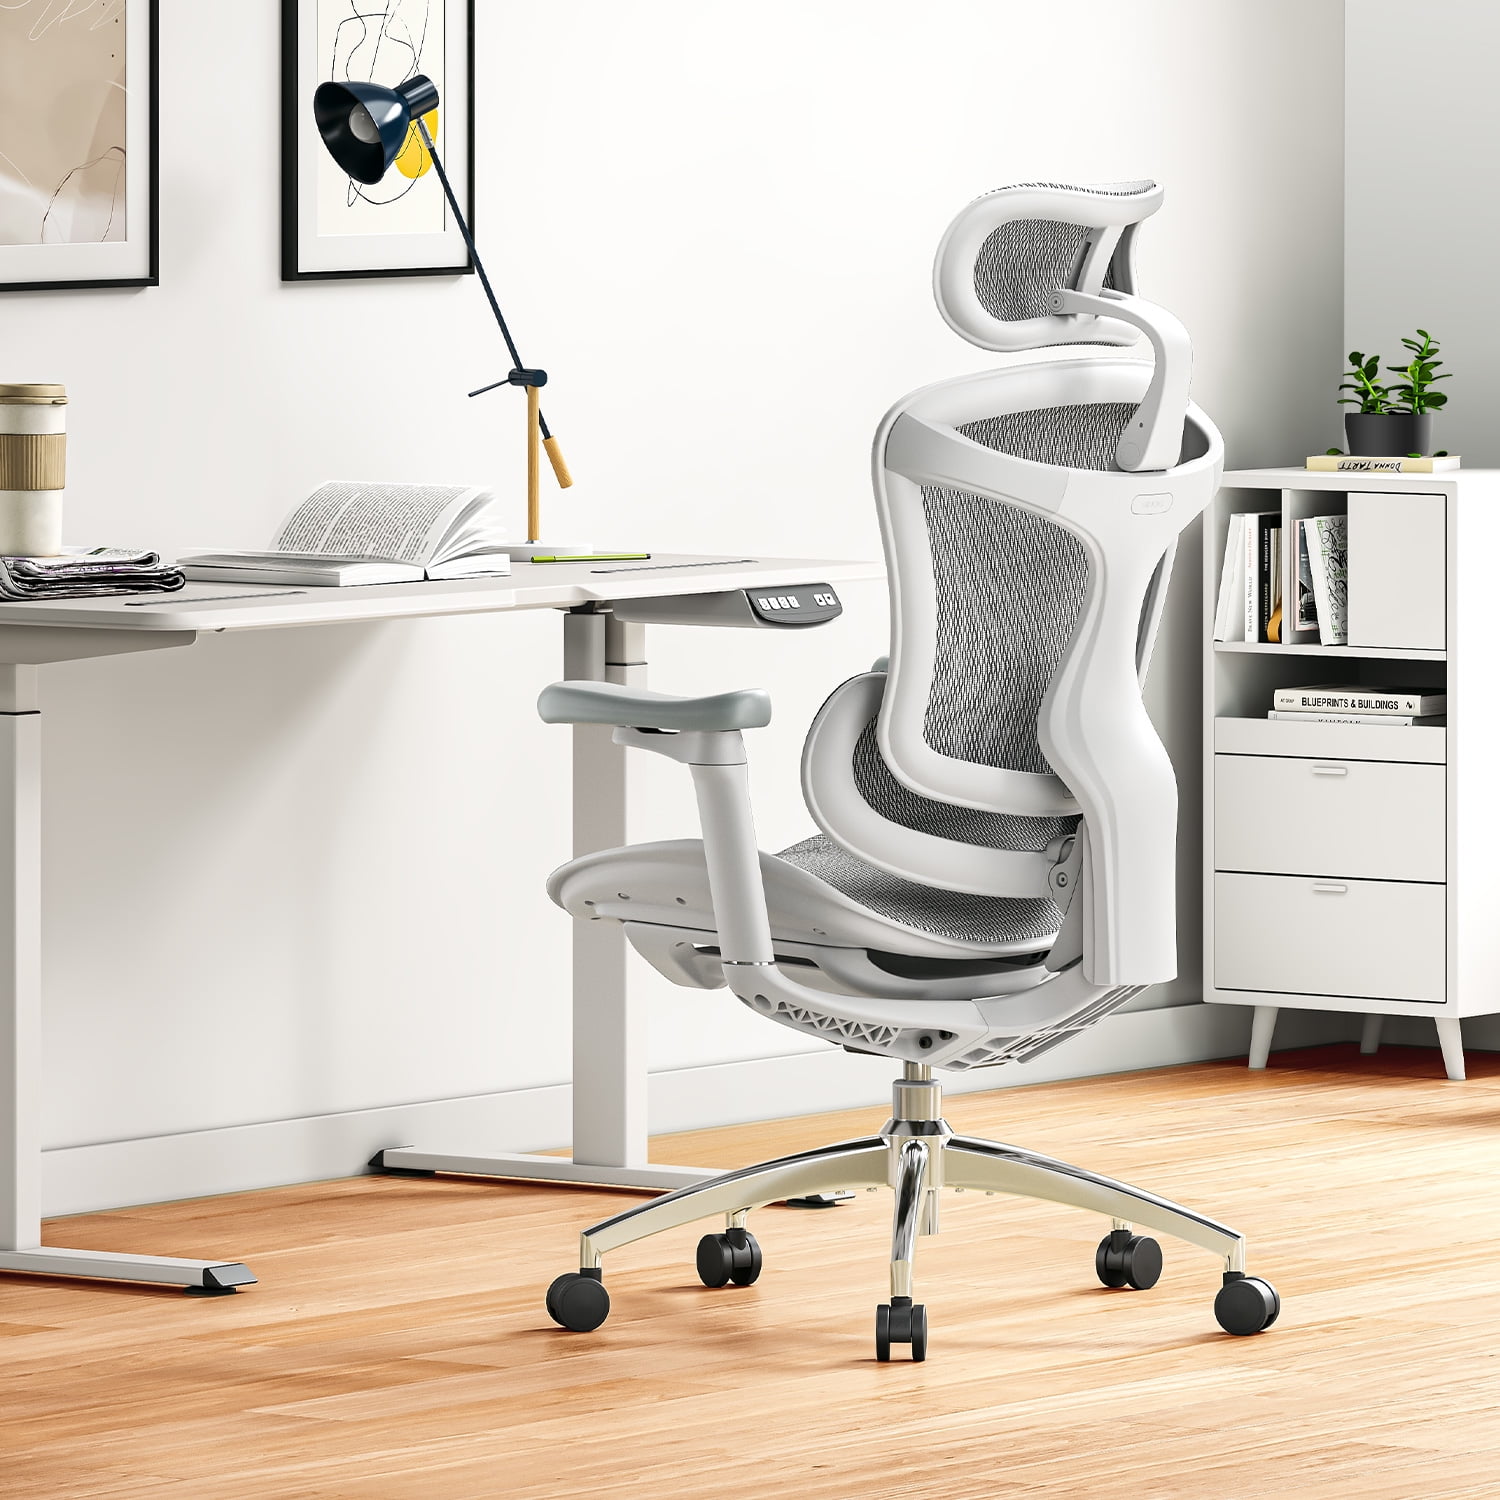 SIHOO Doro-C300 Ergonomic Office Chair-4 Positions Adjustable